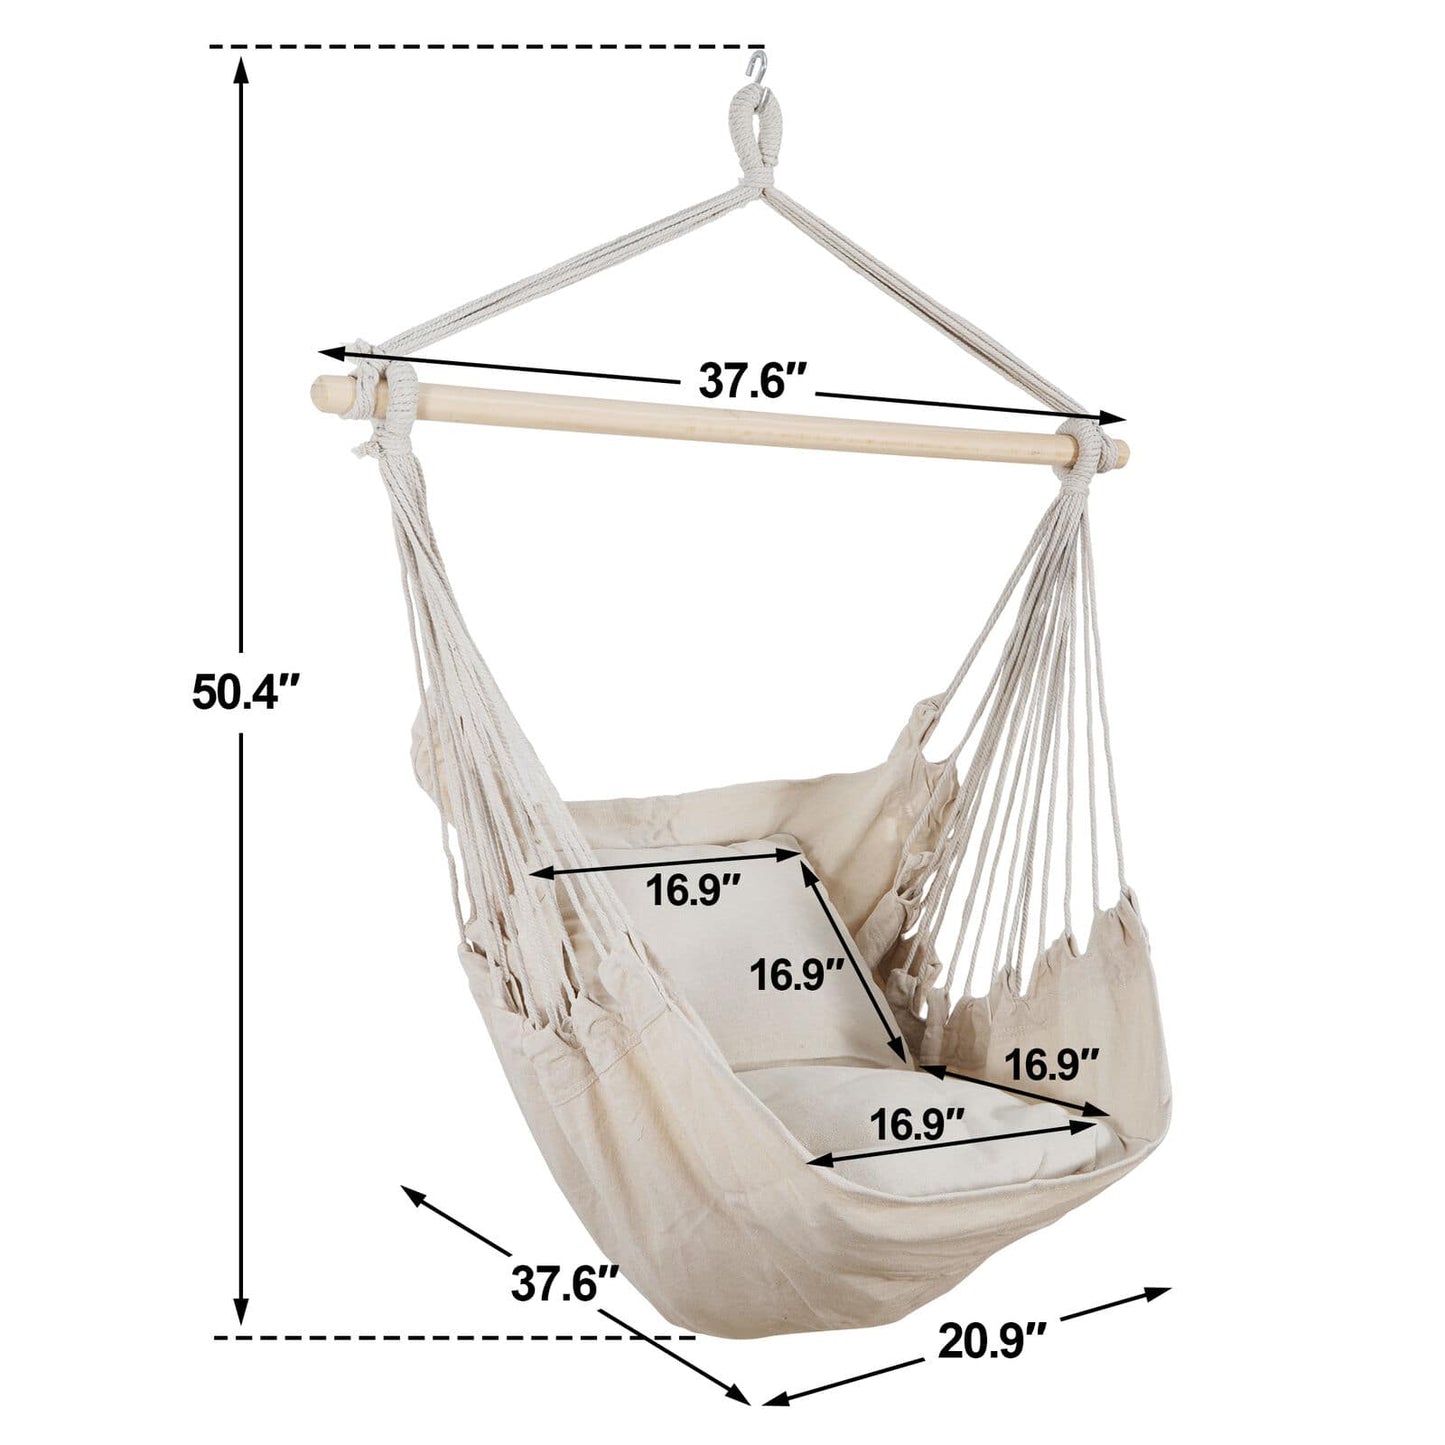 Hammock Chair Swing - Porch Hammock Swing - Hanging Chair - Outdoor, Beige, Netting